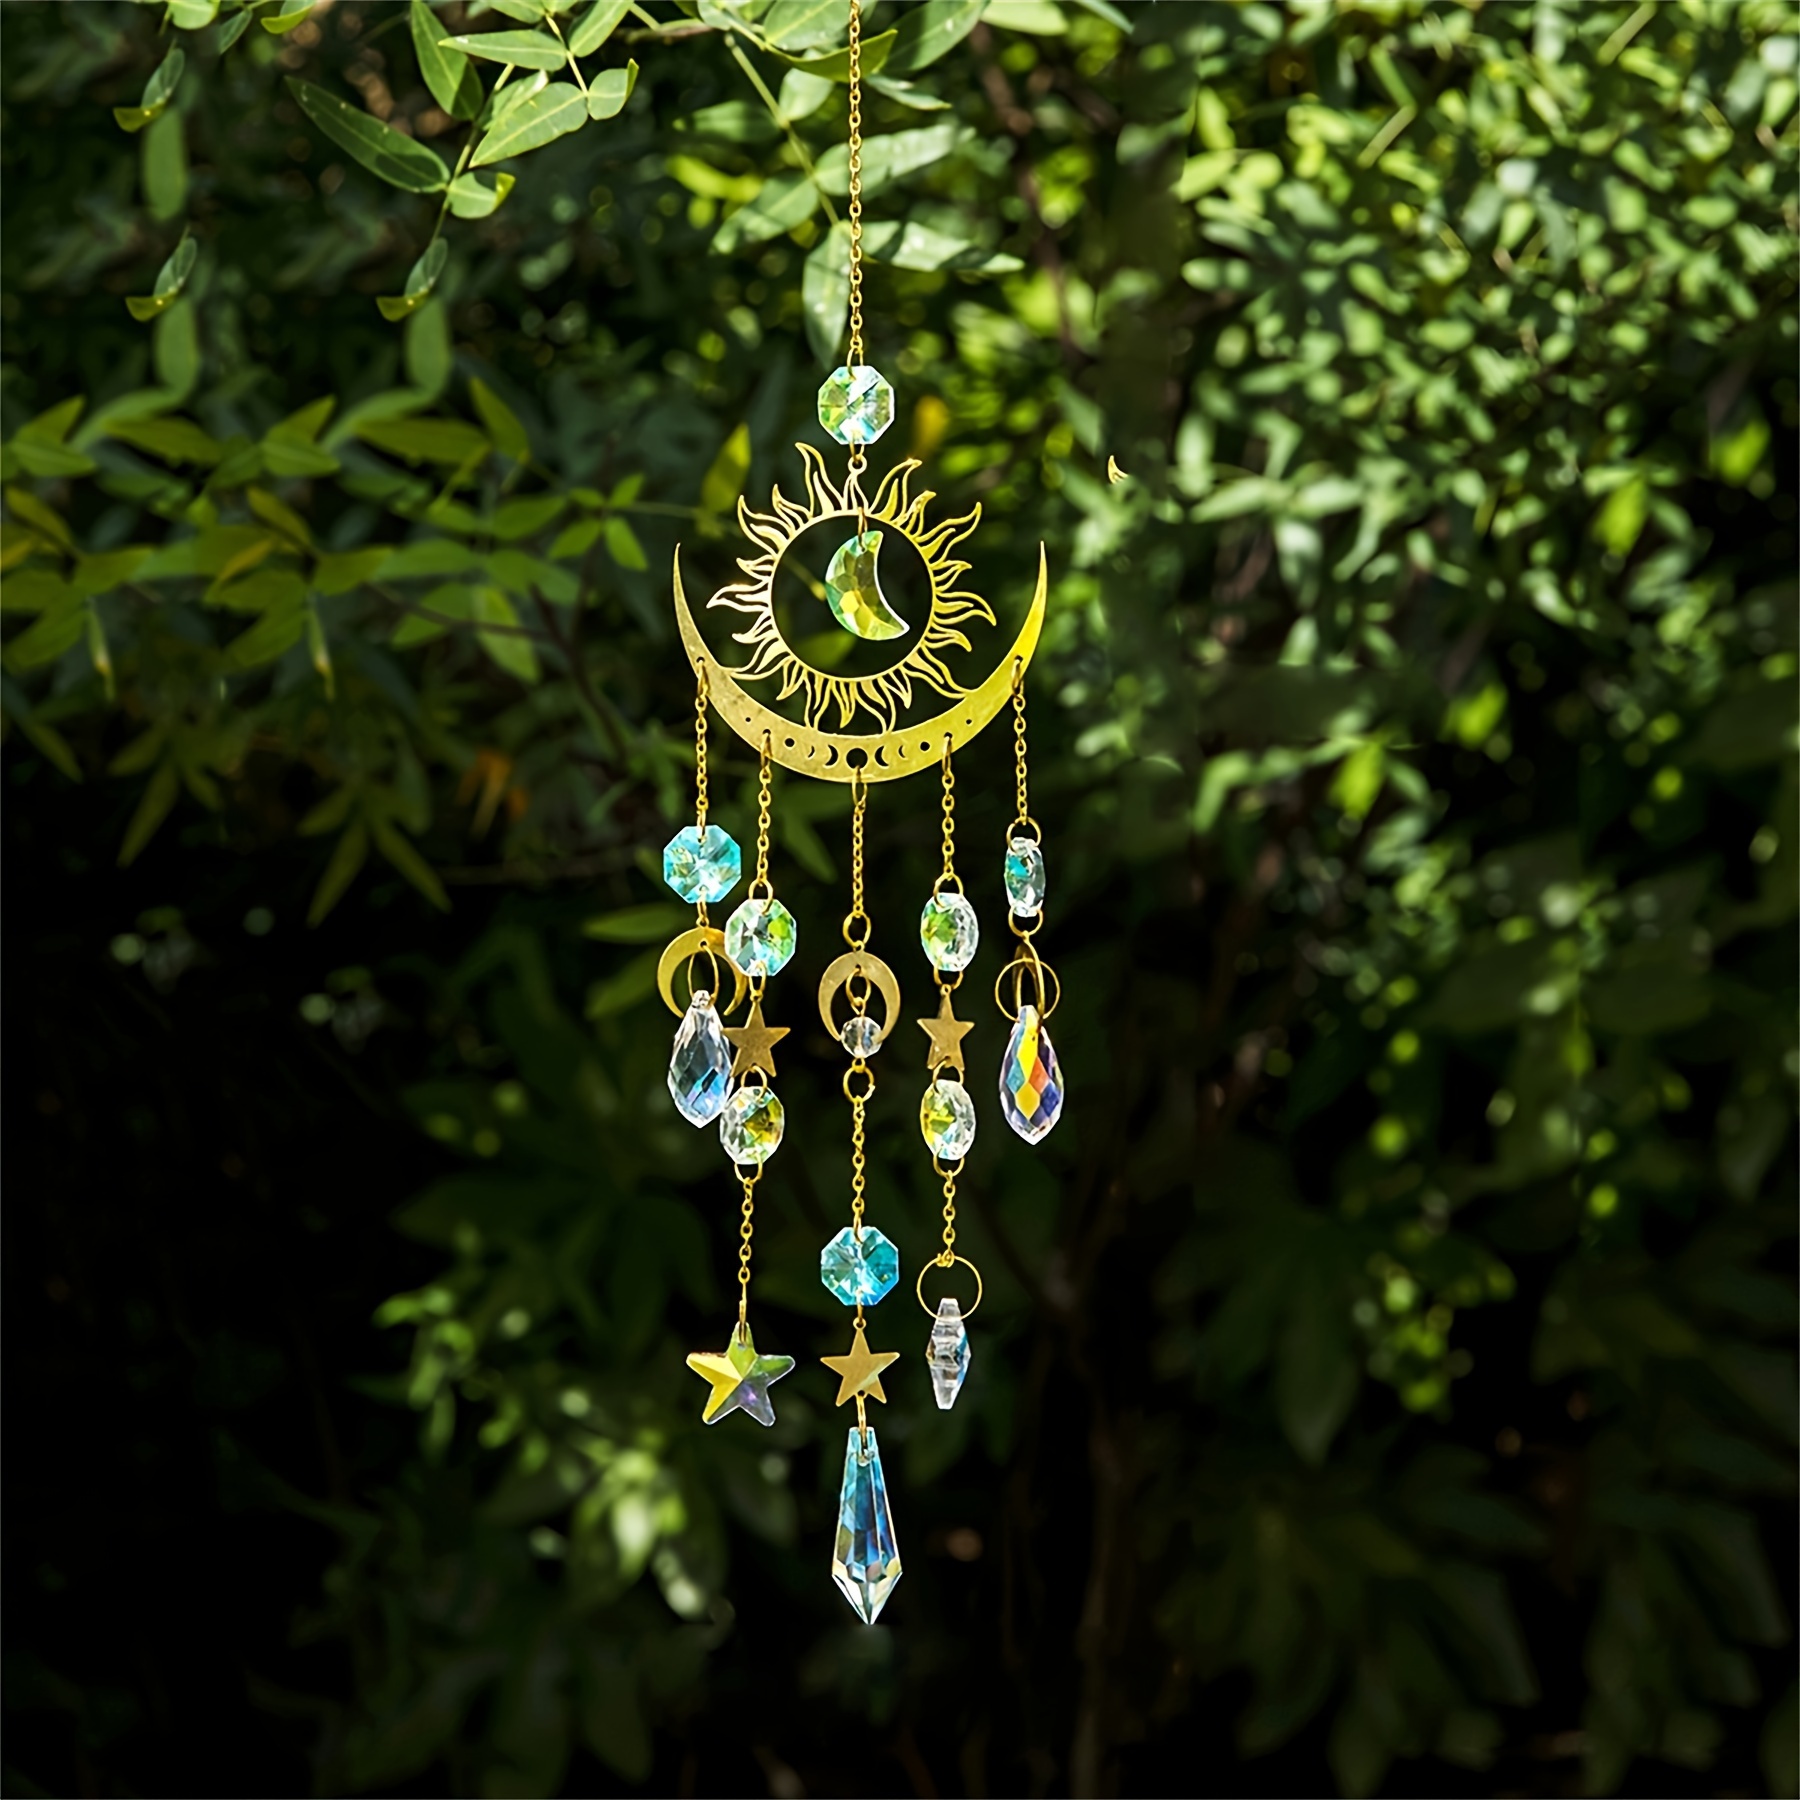 

Golden Flame Moon Crystal Pendant Suncatcher - Glass Outdoor Garden Hanging Decor, Sun Catcher For Room, Home, Window Decoration, And Festive Party Decor